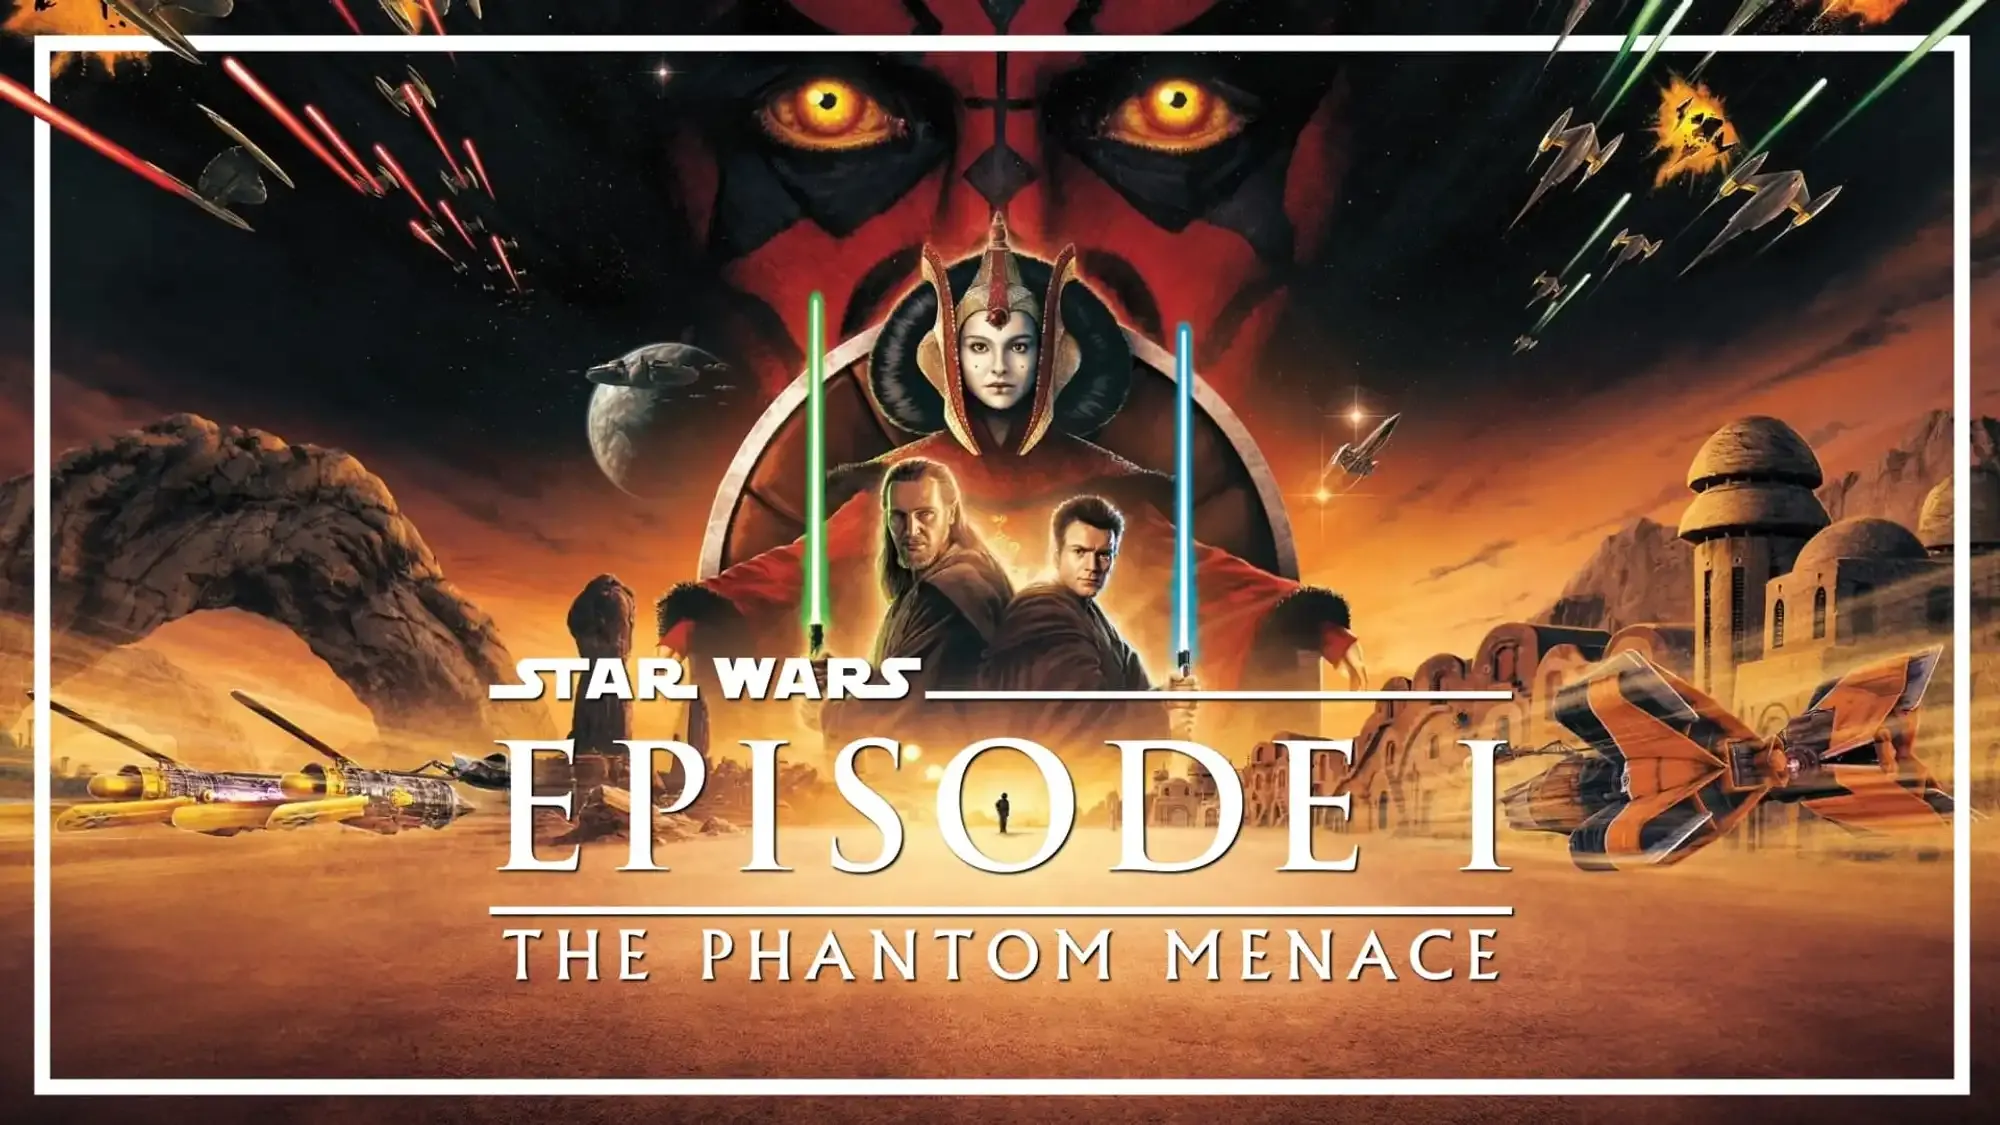 Star Wars: Episode I - The Phantom Menace movie review